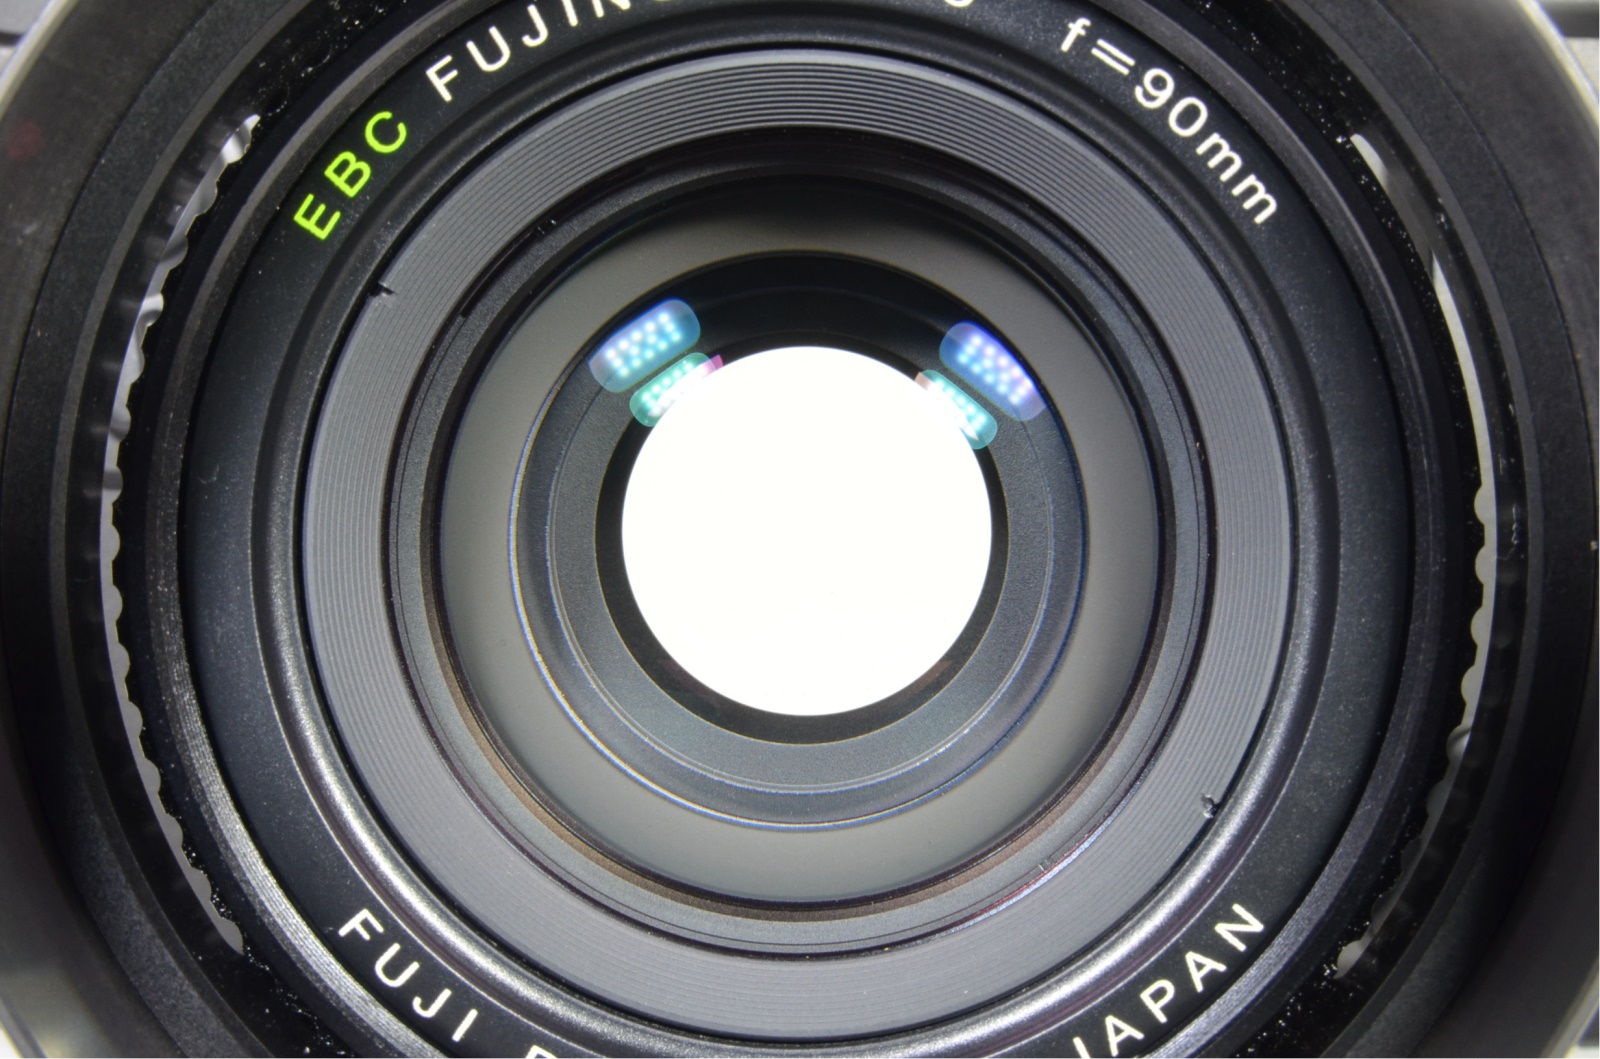 fuji fujifilm gw680iii 90mm f3.5 count 027 medium format camera shooting tested